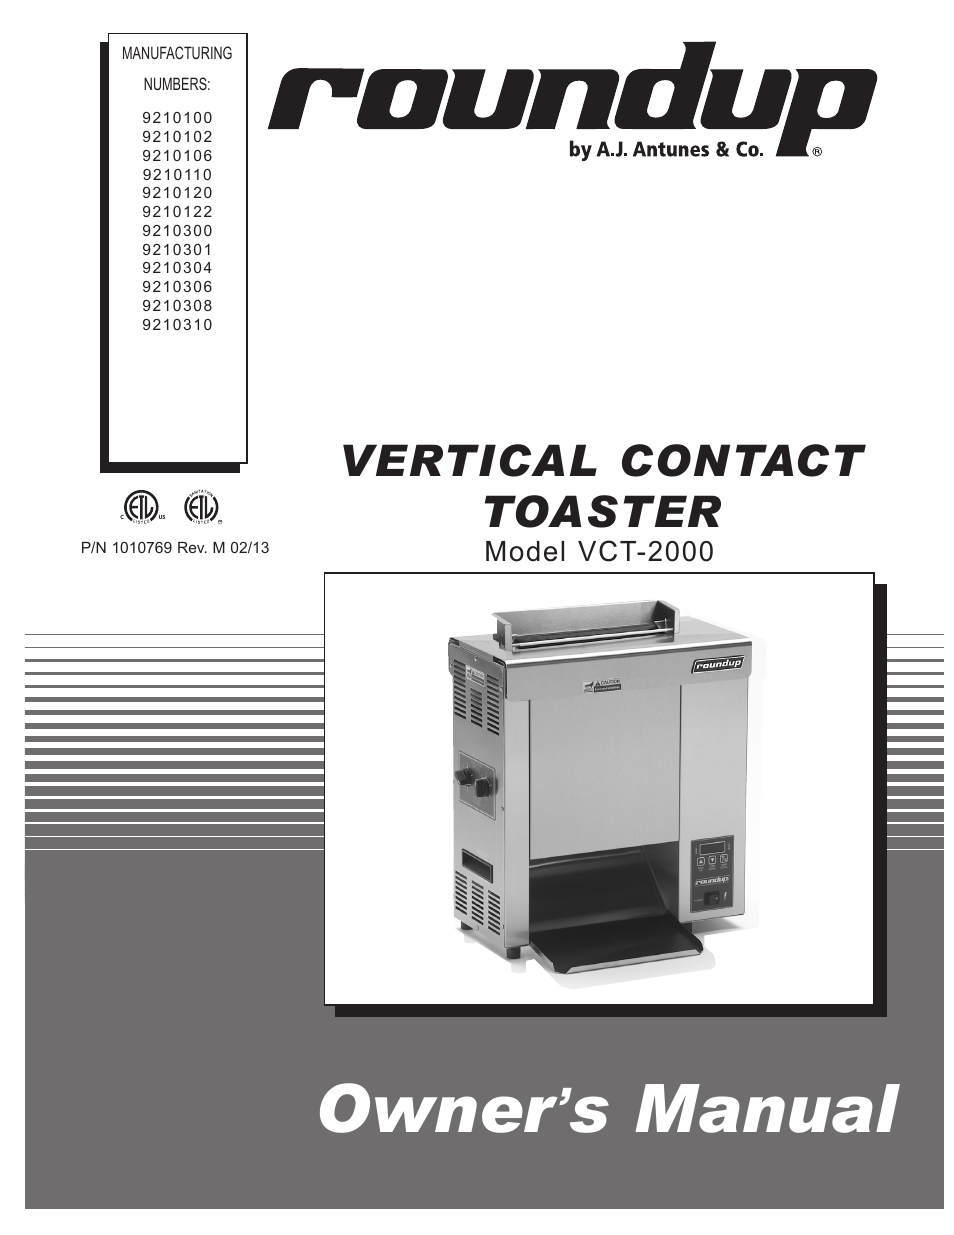 VCT-2000 9210300